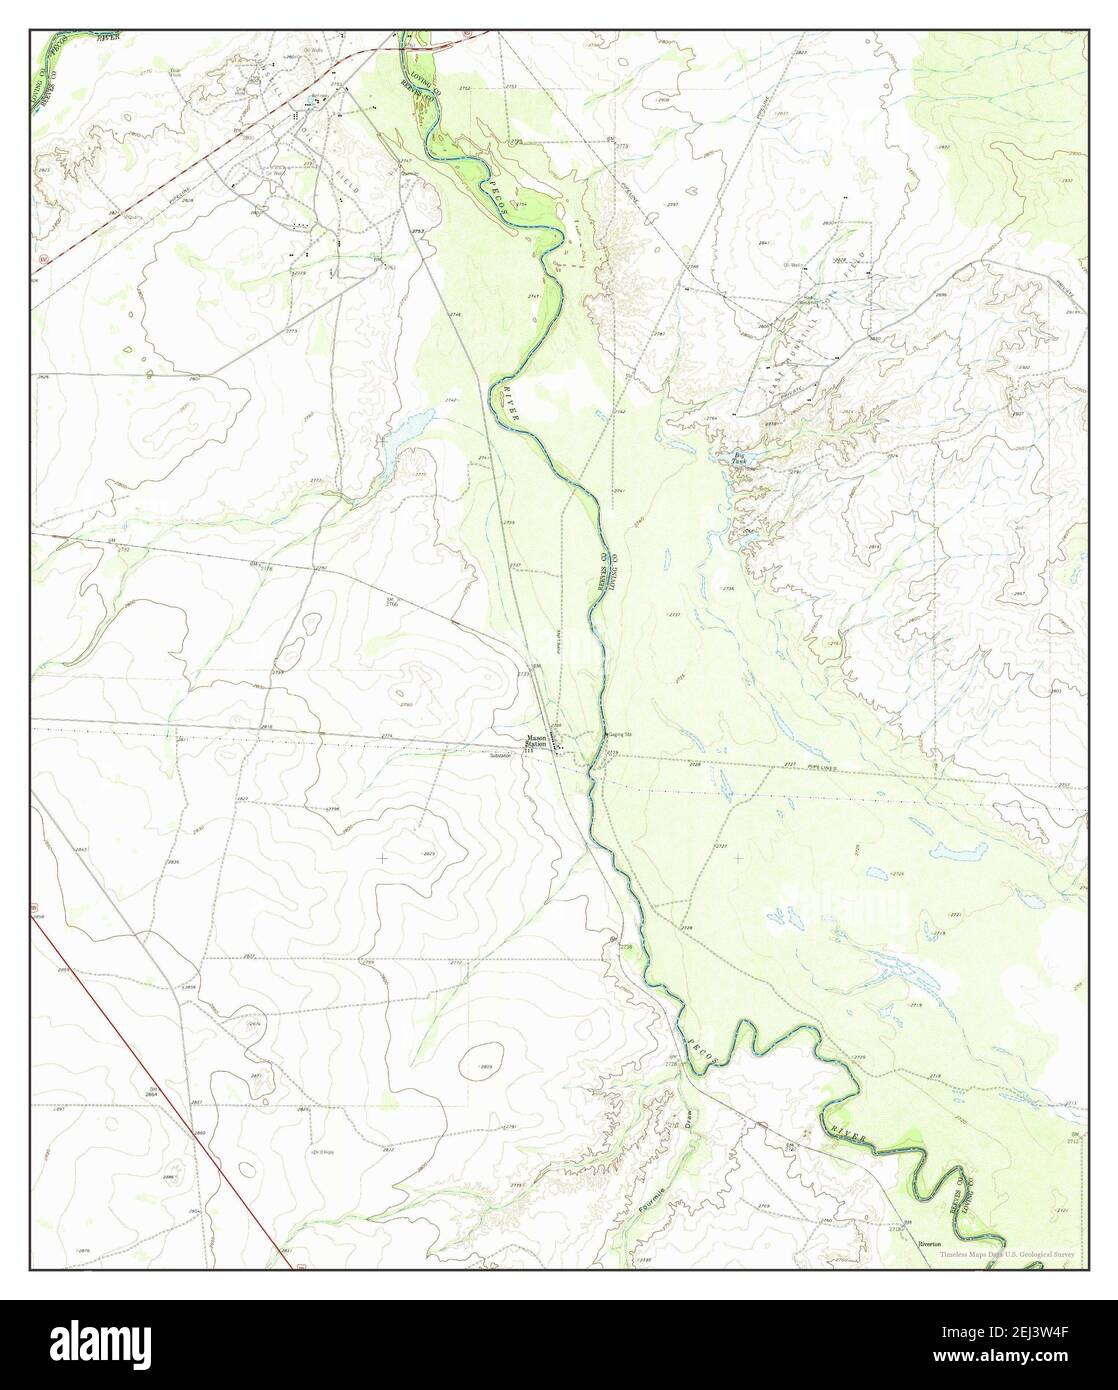 https://c8.alamy.com/comp/2EJ3W4F/orla-se-texas-map-1961-124000-united-states-of-america-by-timeless-maps-data-us-geological-survey-2EJ3W4F.jpg